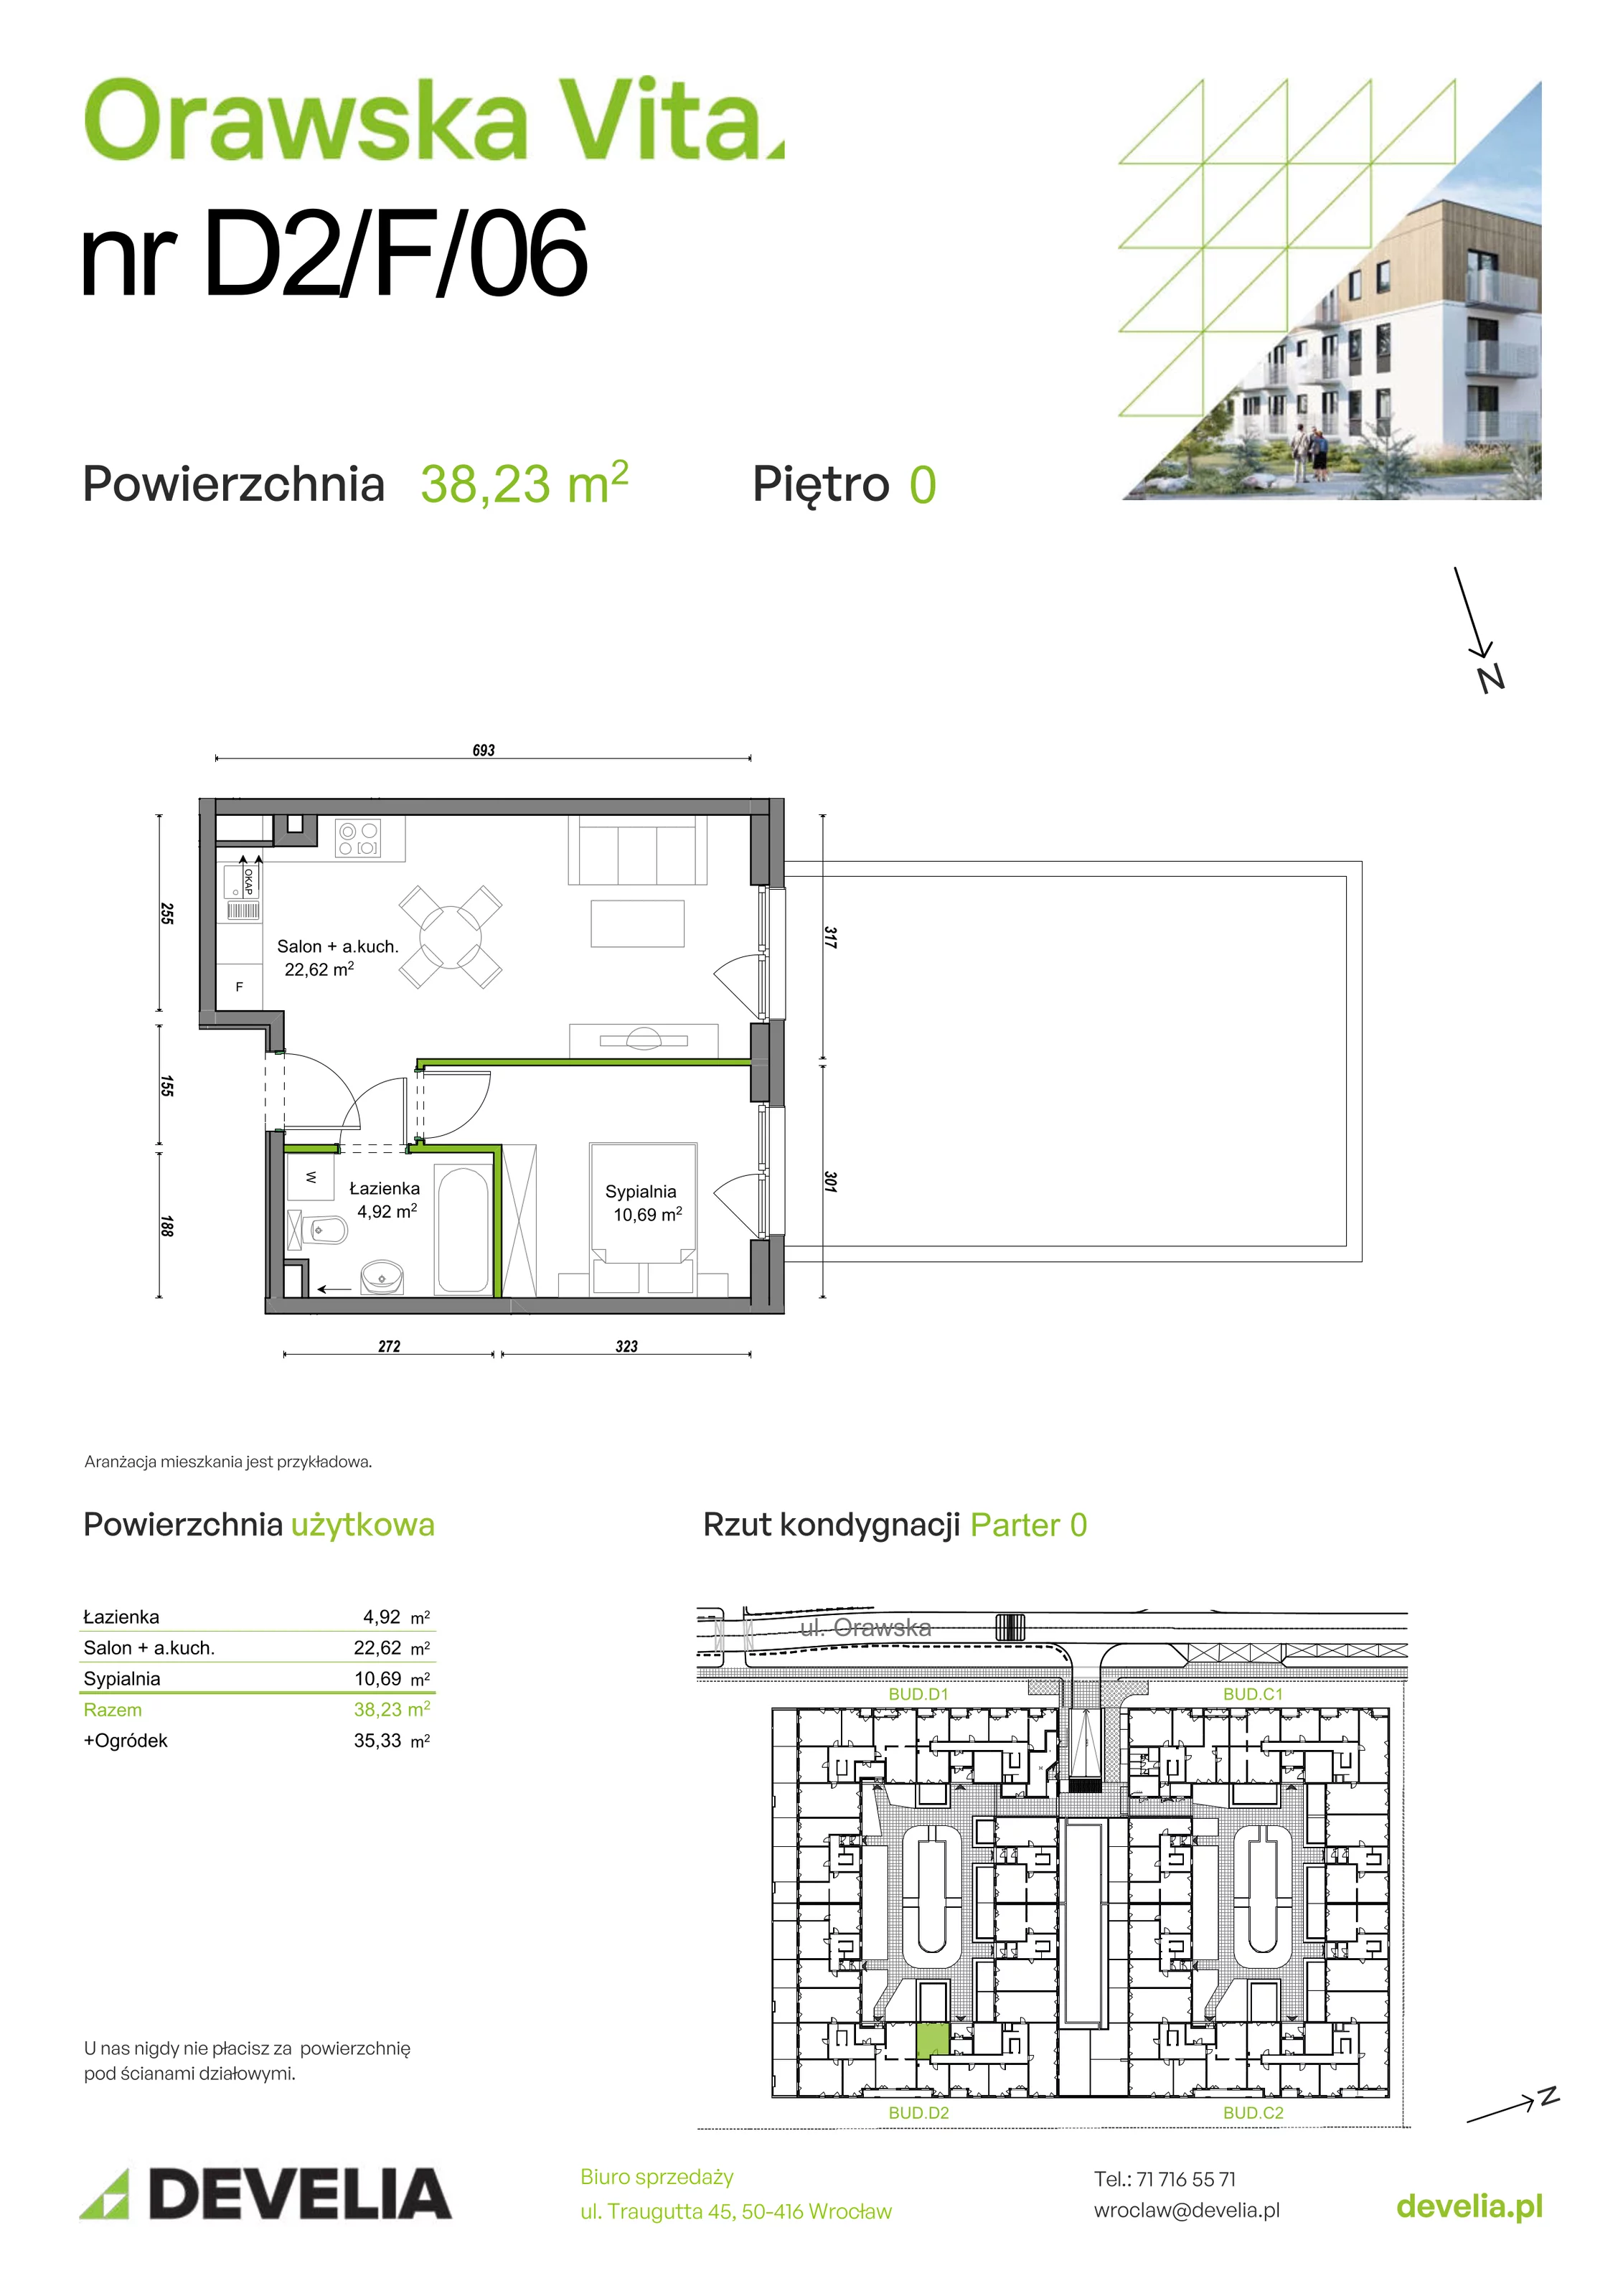 Mieszkanie 38,23 m², parter, oferta nr D2/F/06, Orawska Vita, Wrocław, Ołtaszyn, Krzyki, ul. Orawska 73